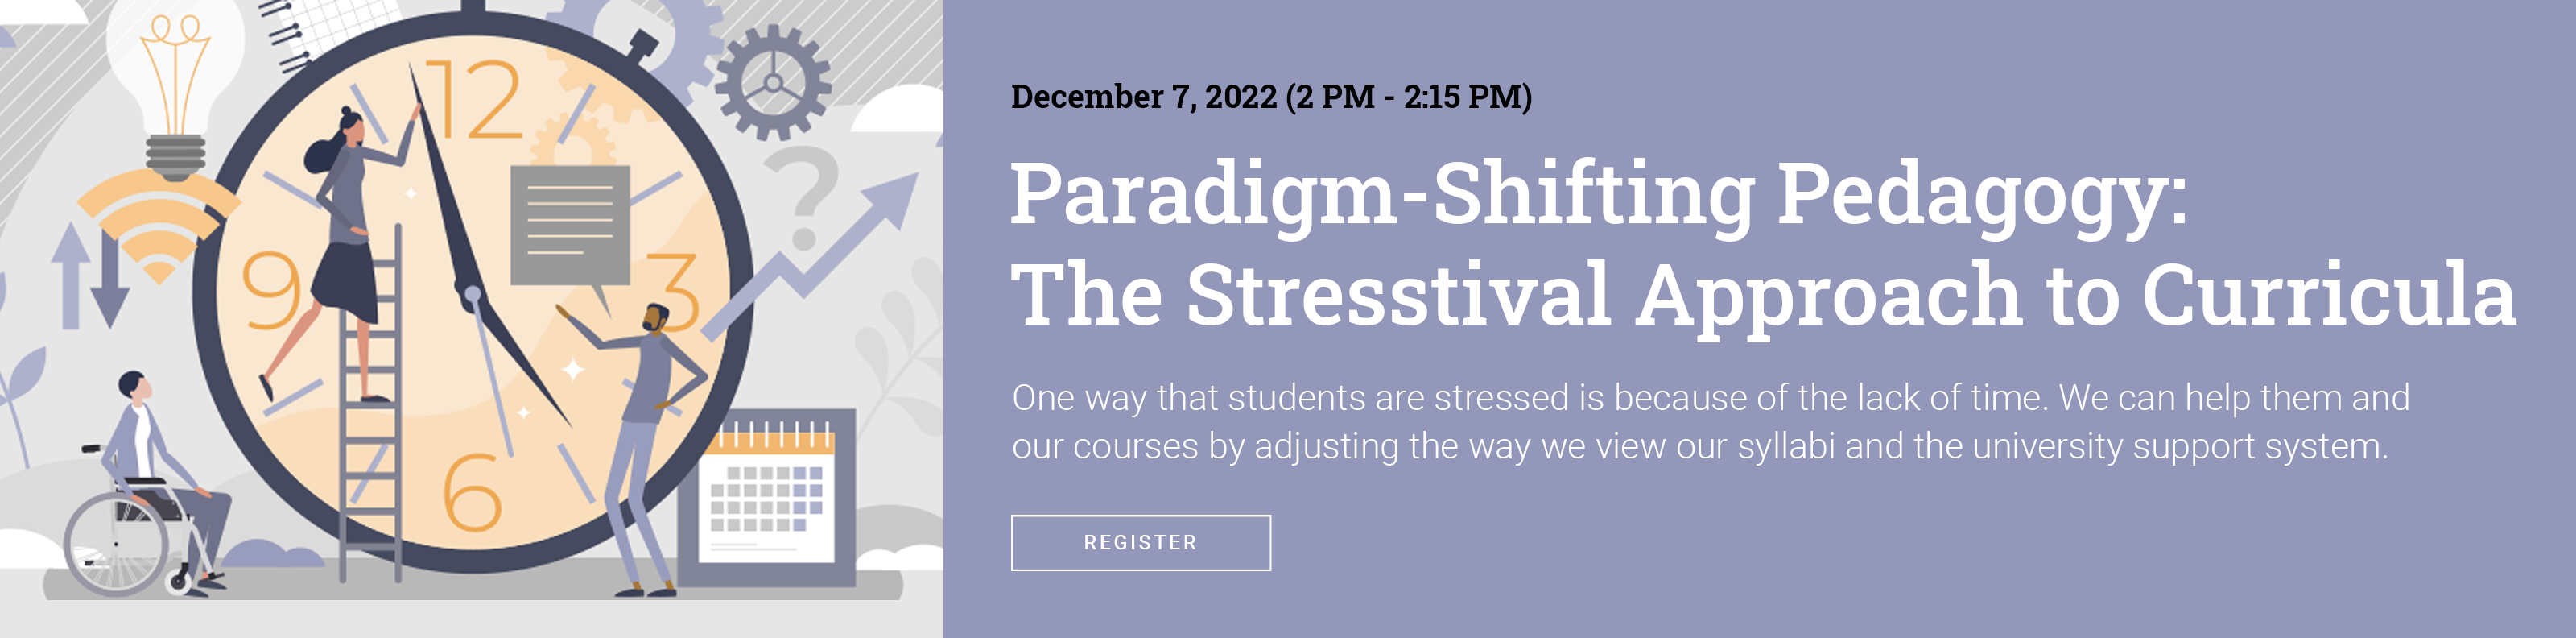 paradigm-shifting-pedagogy.png